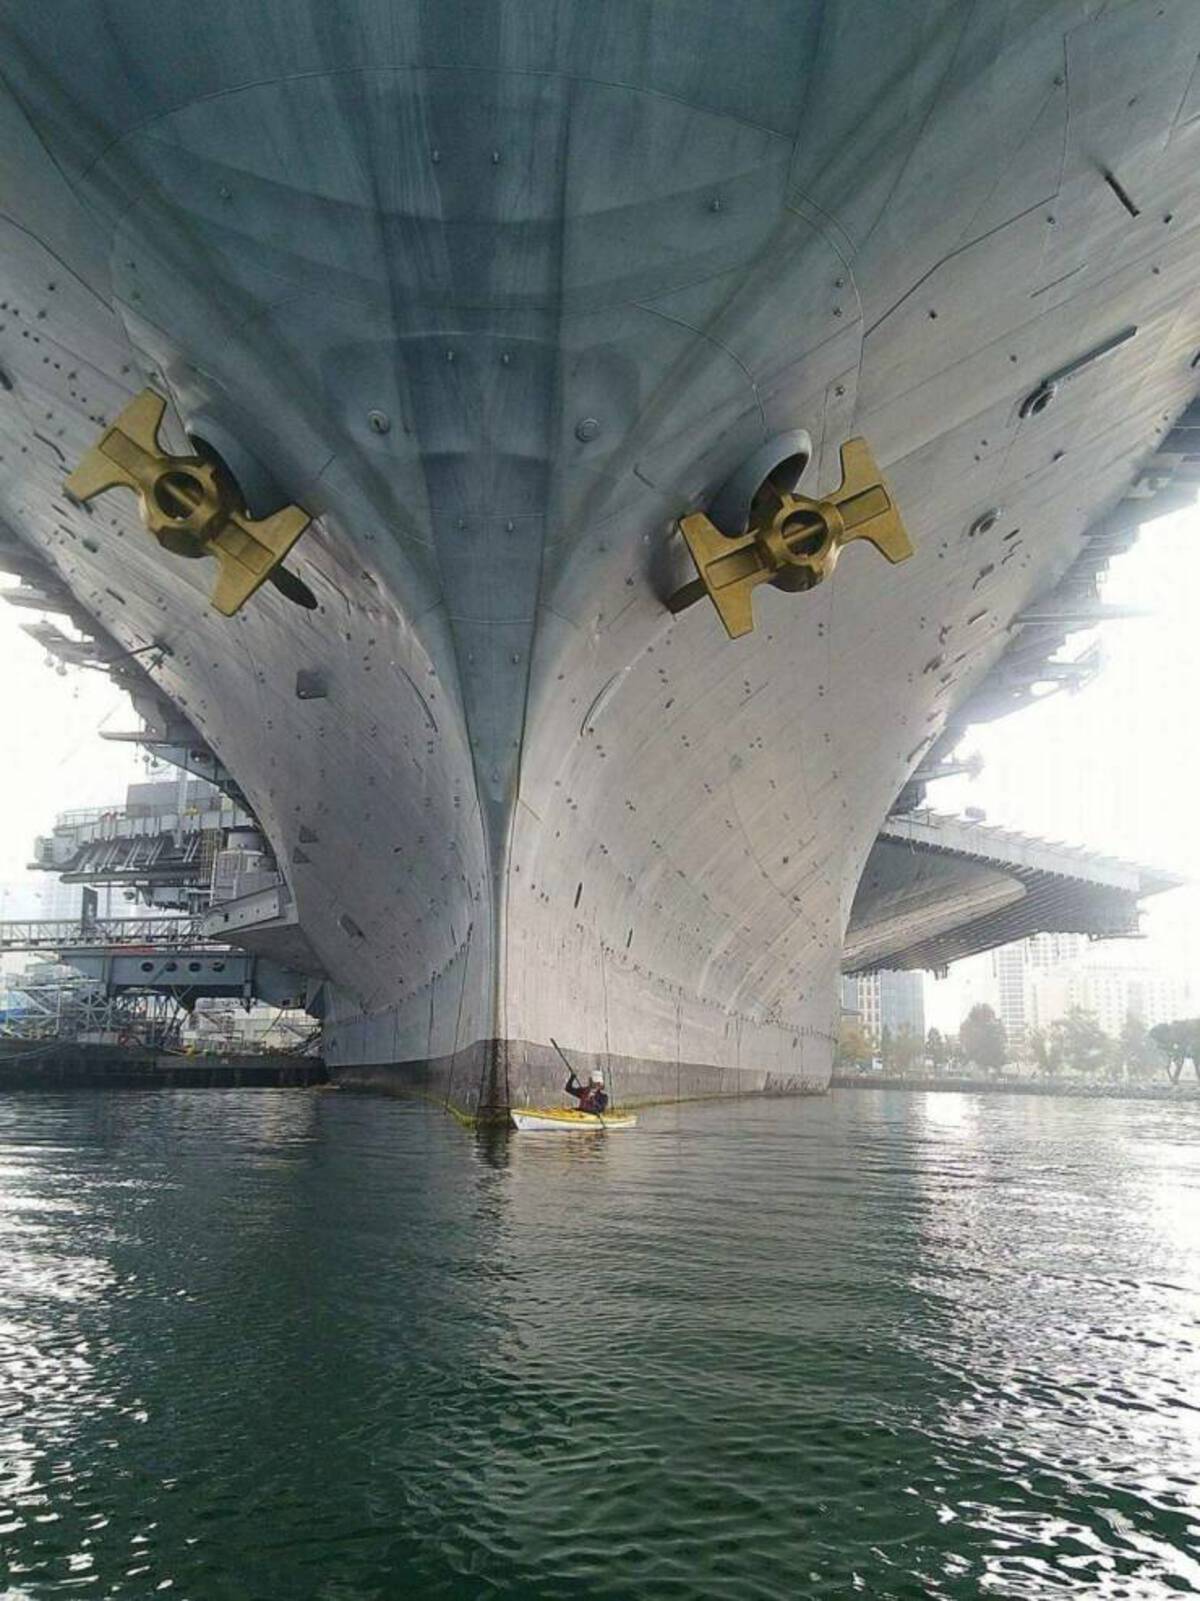 kayak vs aircraft carrier - exist